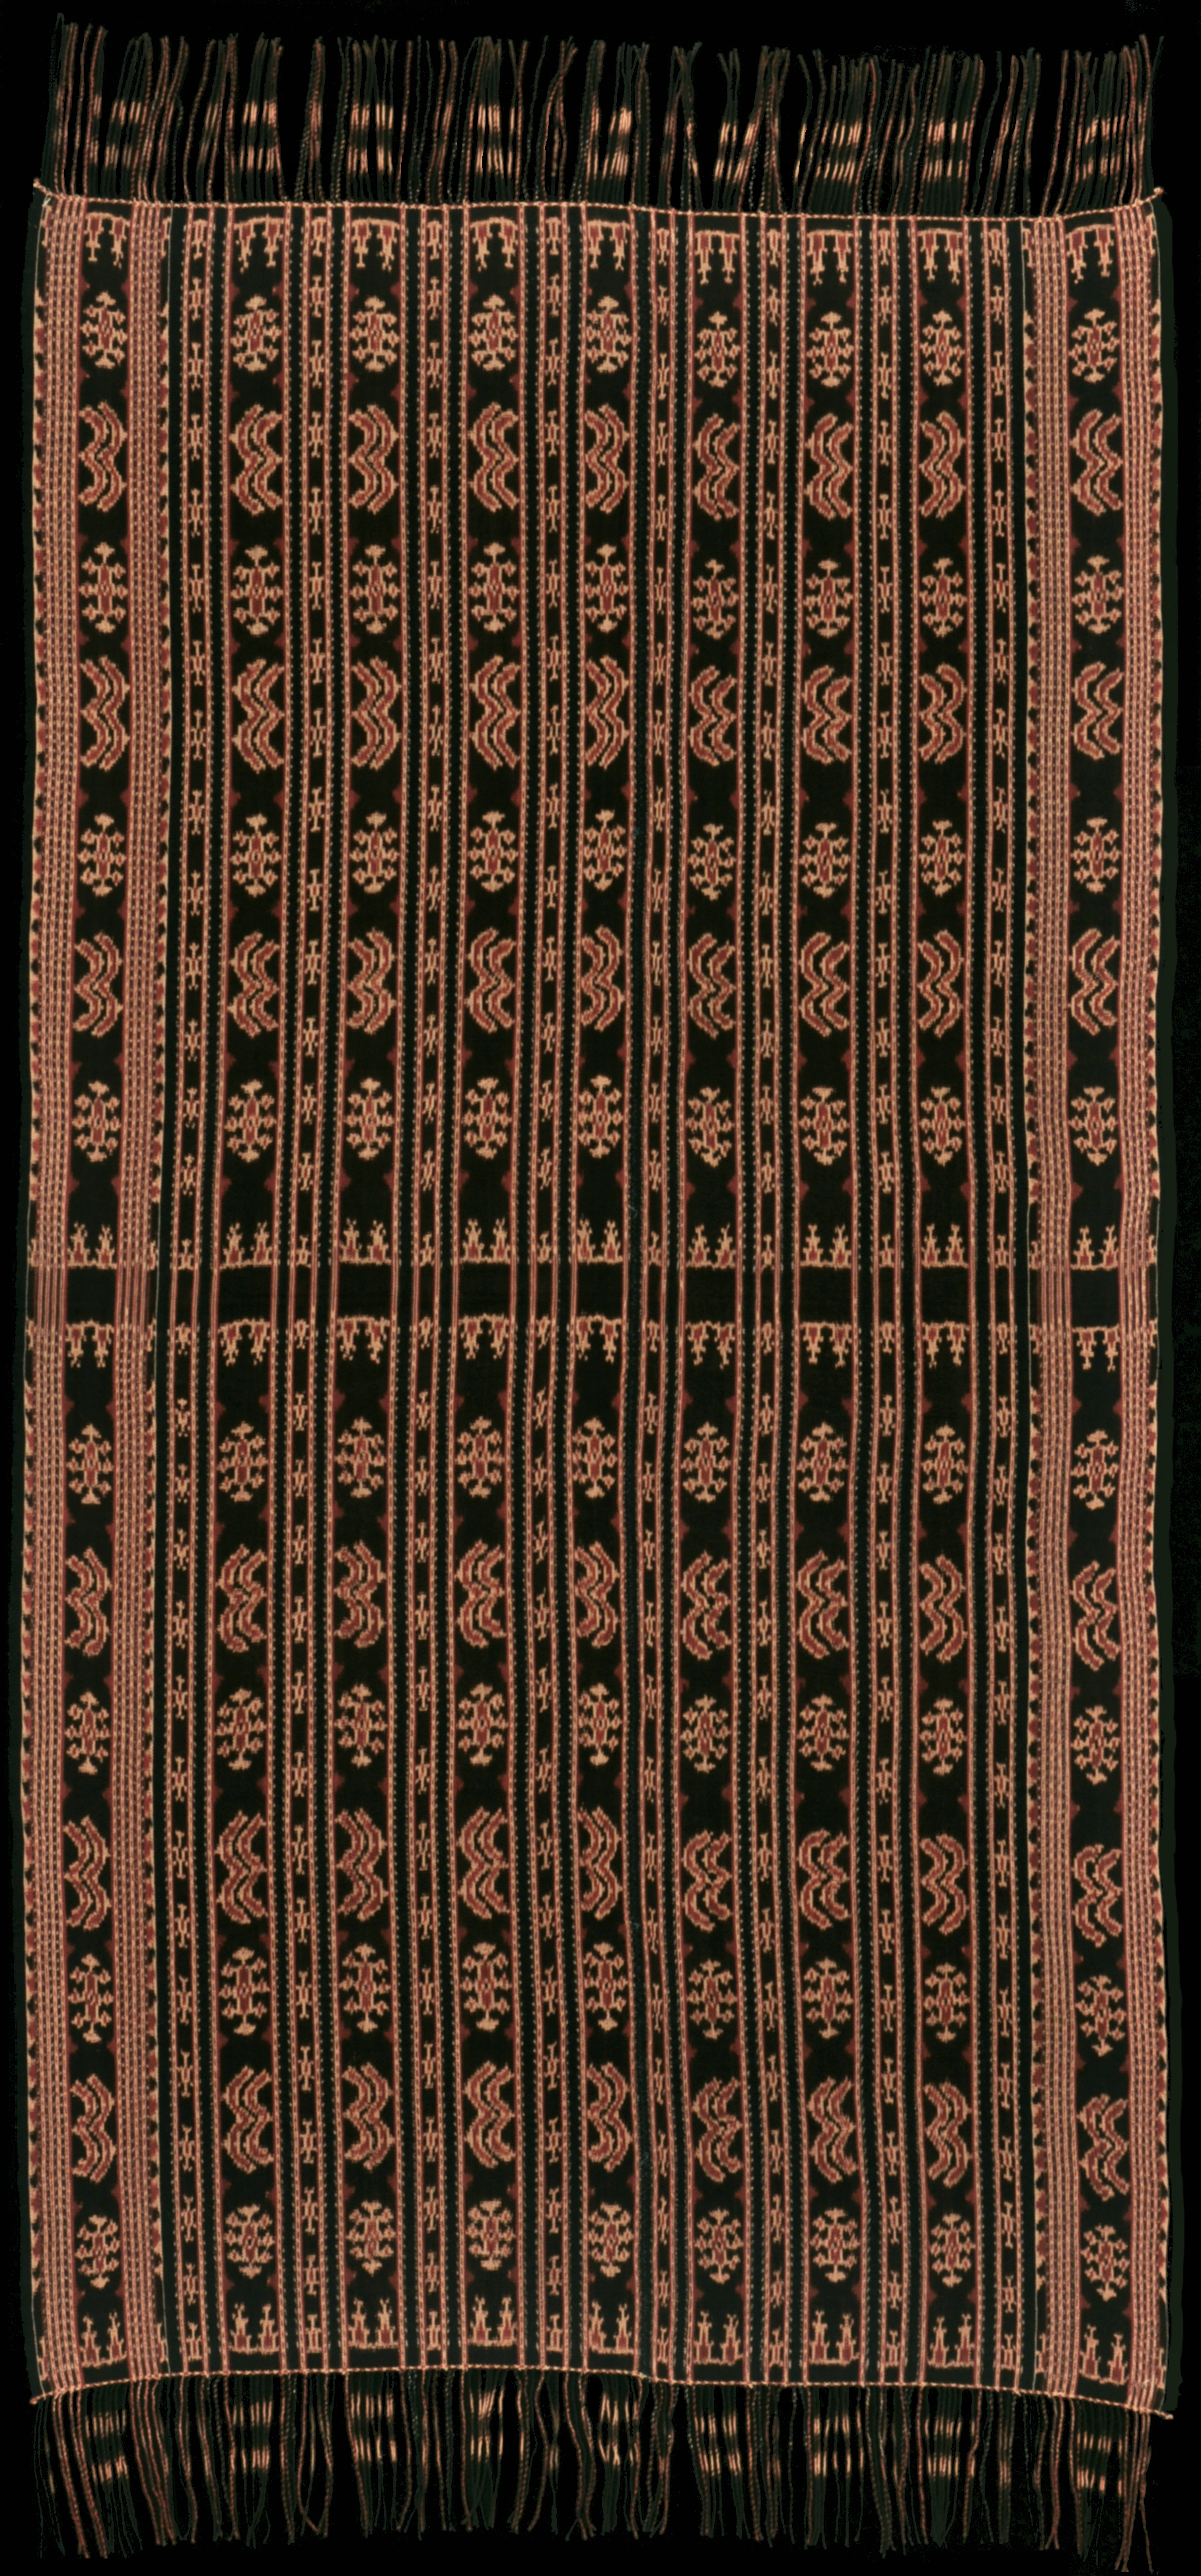 Ikat from Raijua, Savu Group, Indonesia